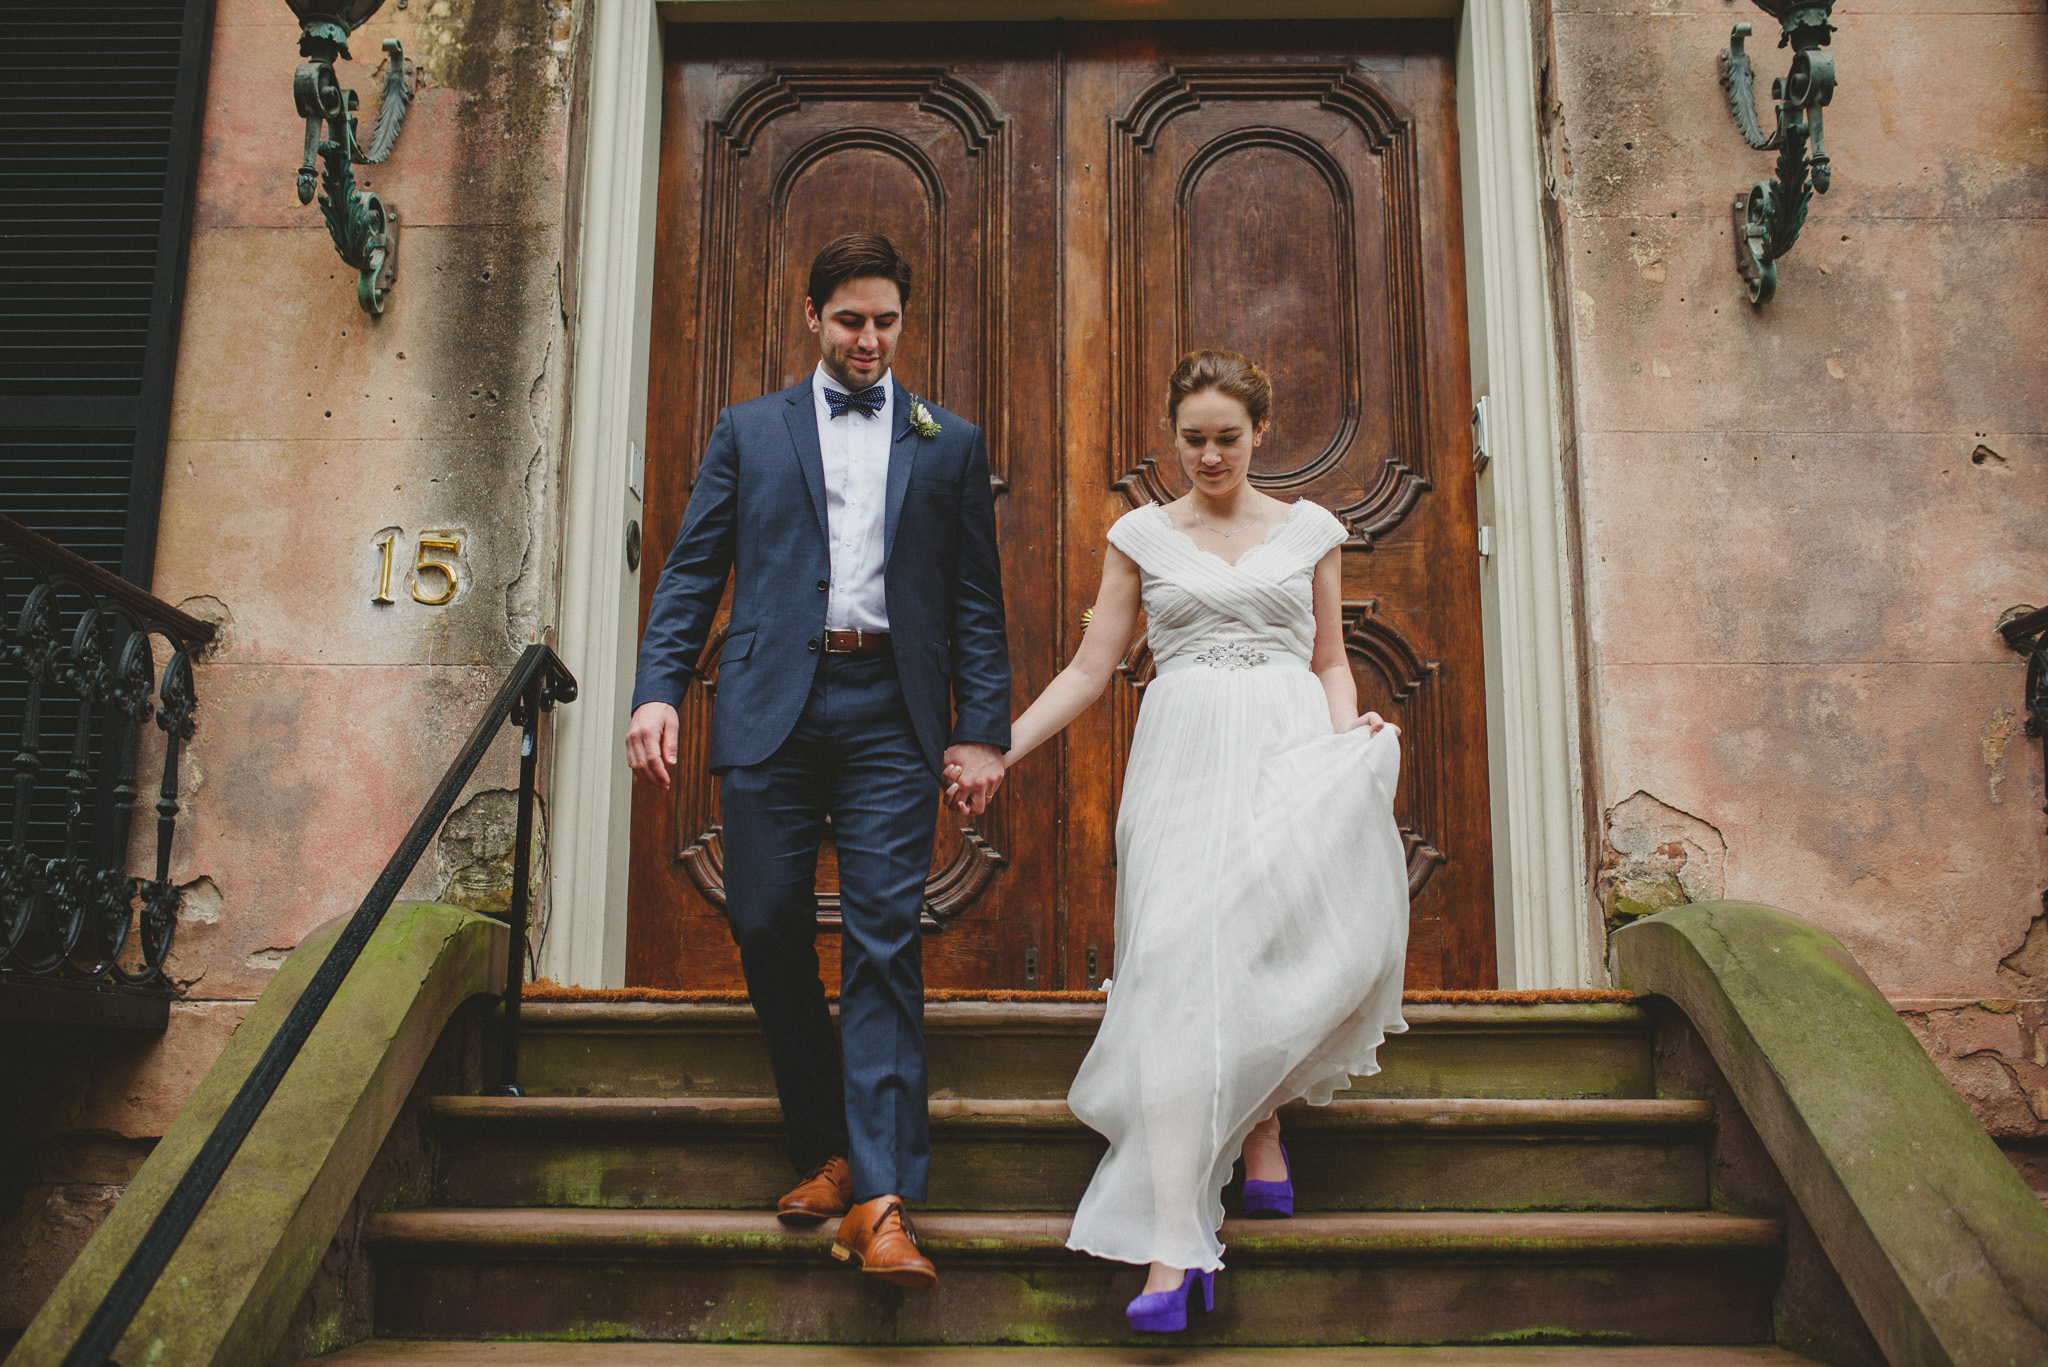 Savannah Wedding Photography - Bride and Groom on stairs